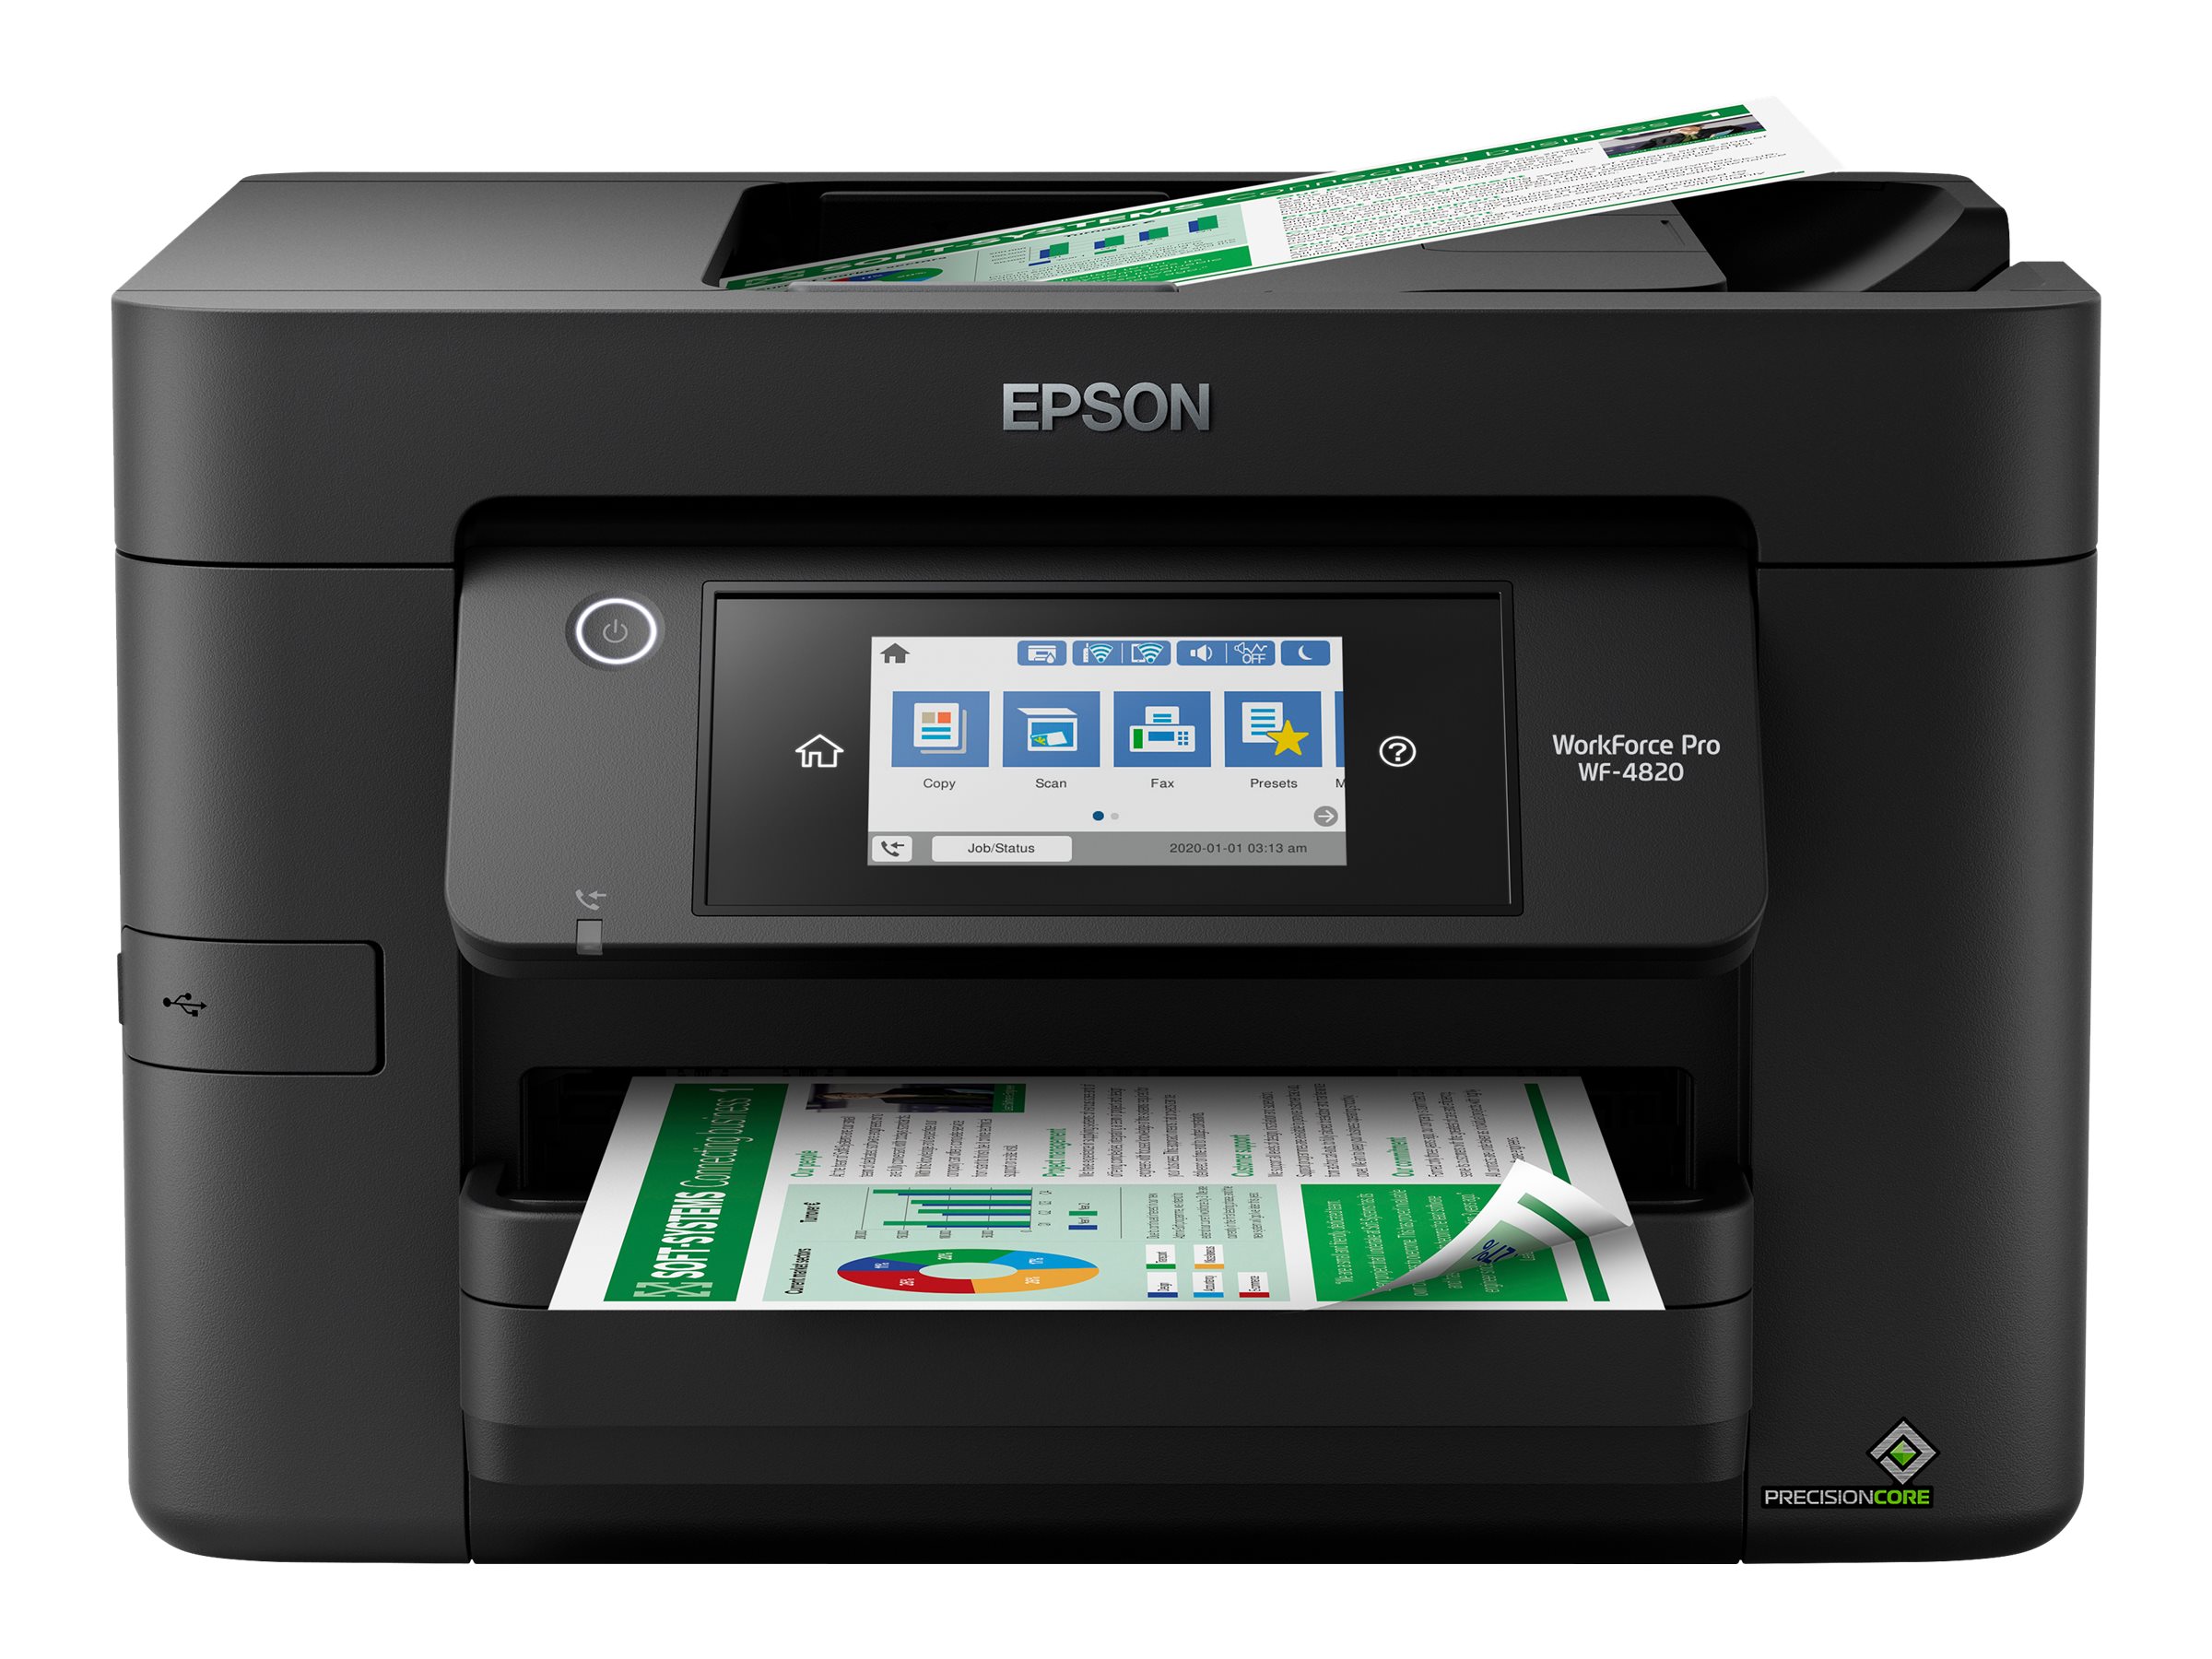 Epson Workforce Pro Multifunction Printer Black Wf 4820 London Drugs 7001